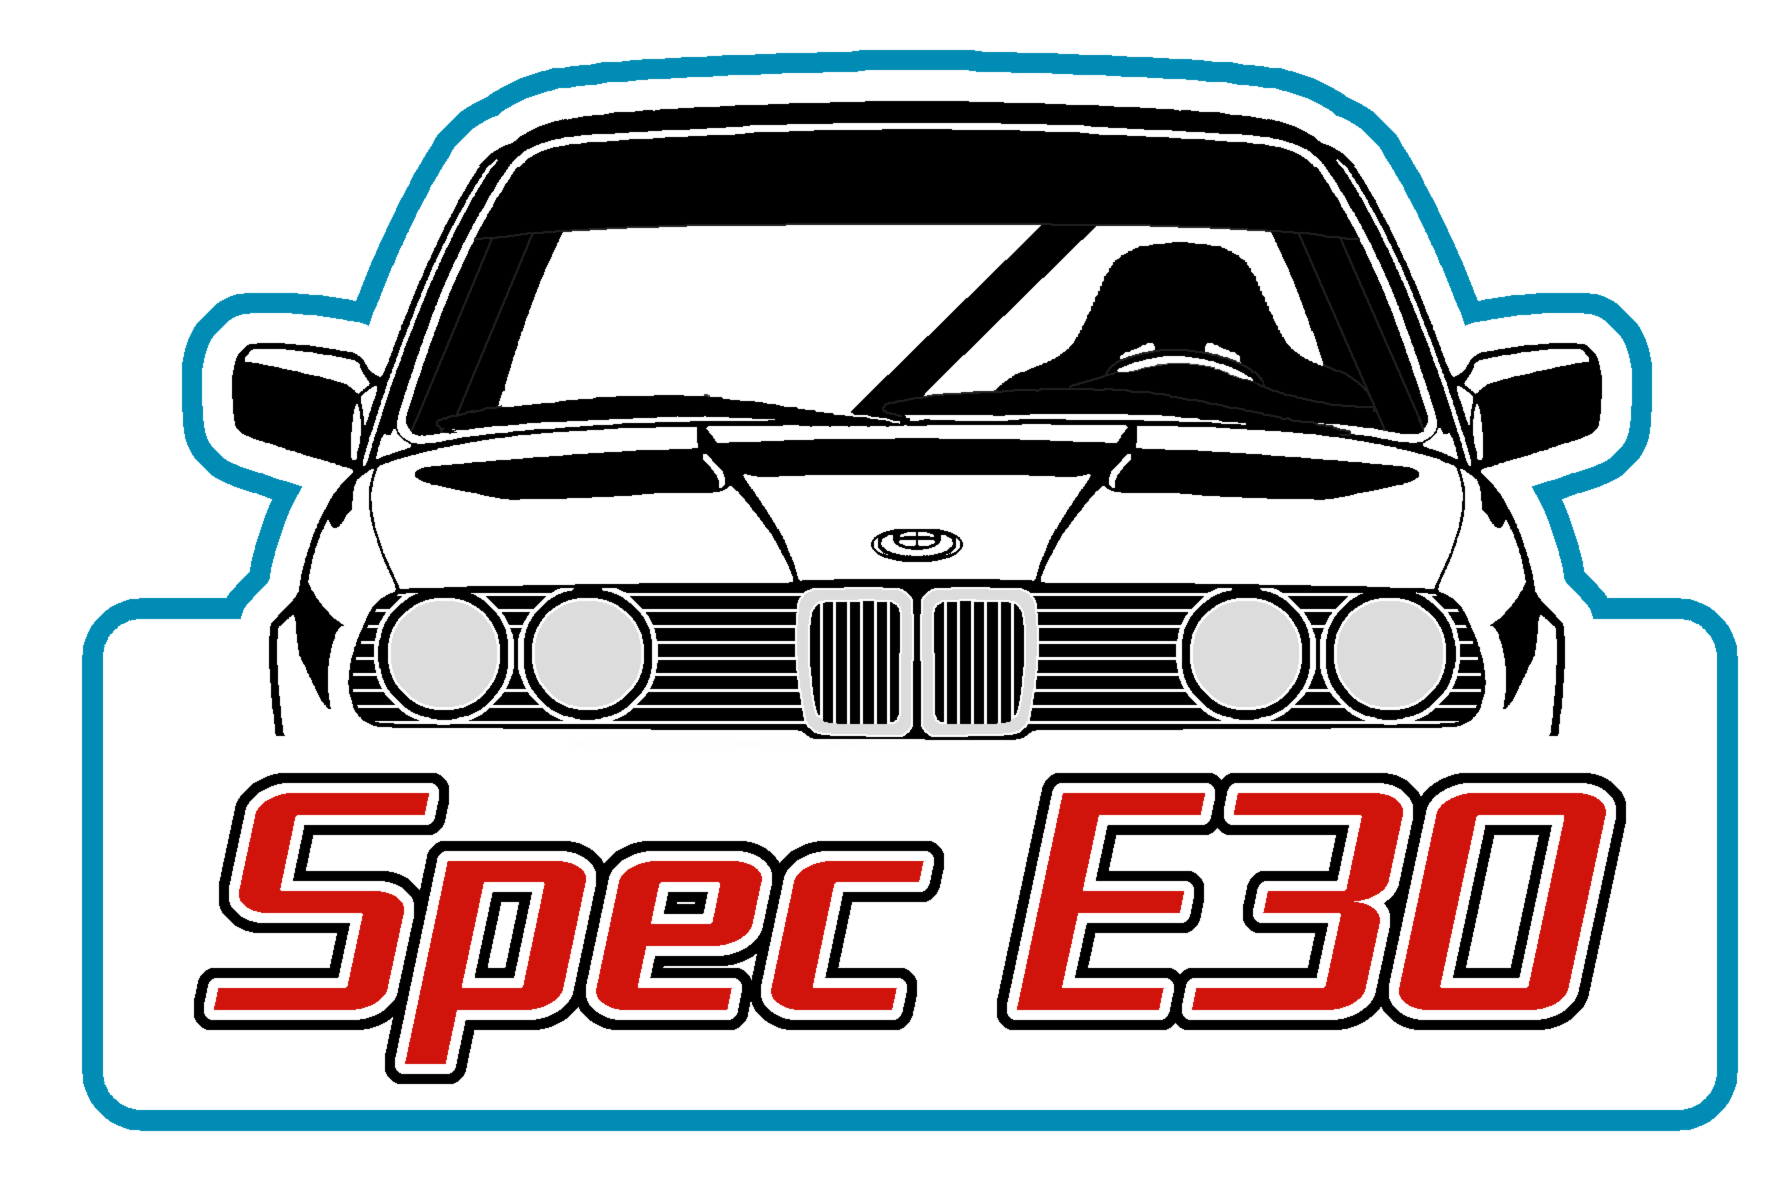 E30 Logo - Logo? - General Discussion - SpecE30 Community Forum